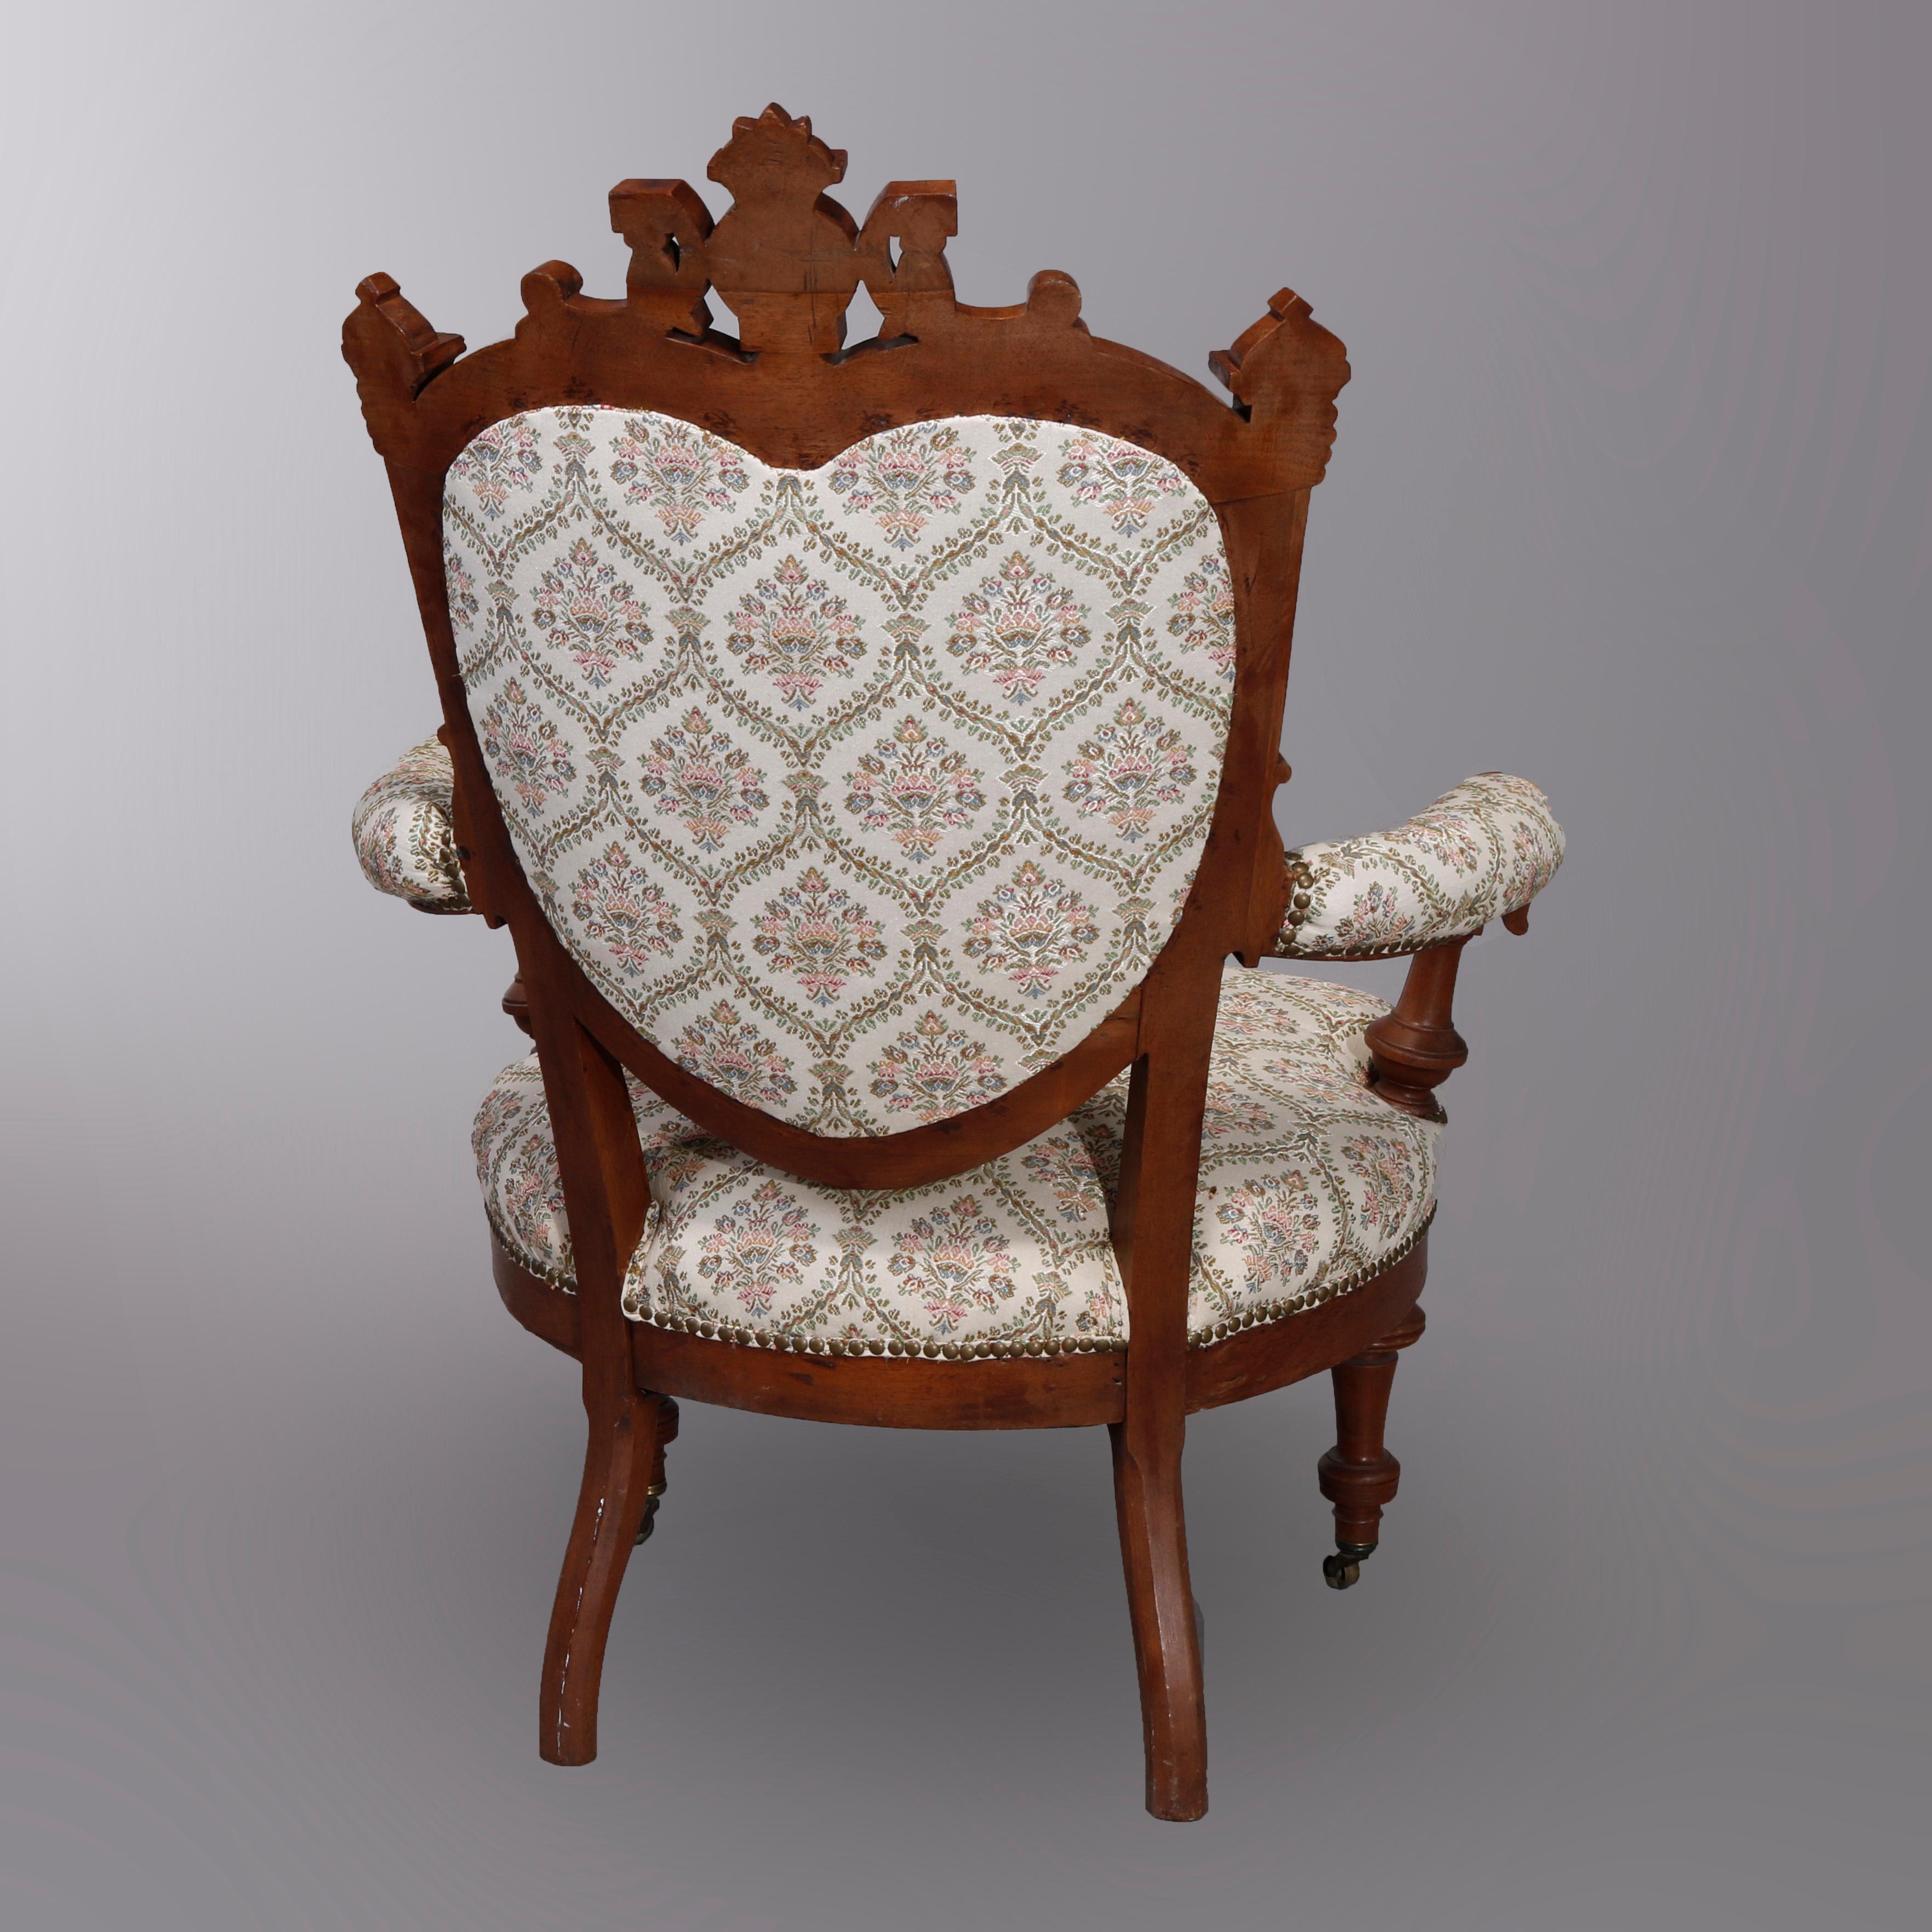 Antique Renaissance Revival Walnut & Burl Parlor Armchairs with Marquetry, c1880 For Sale 1